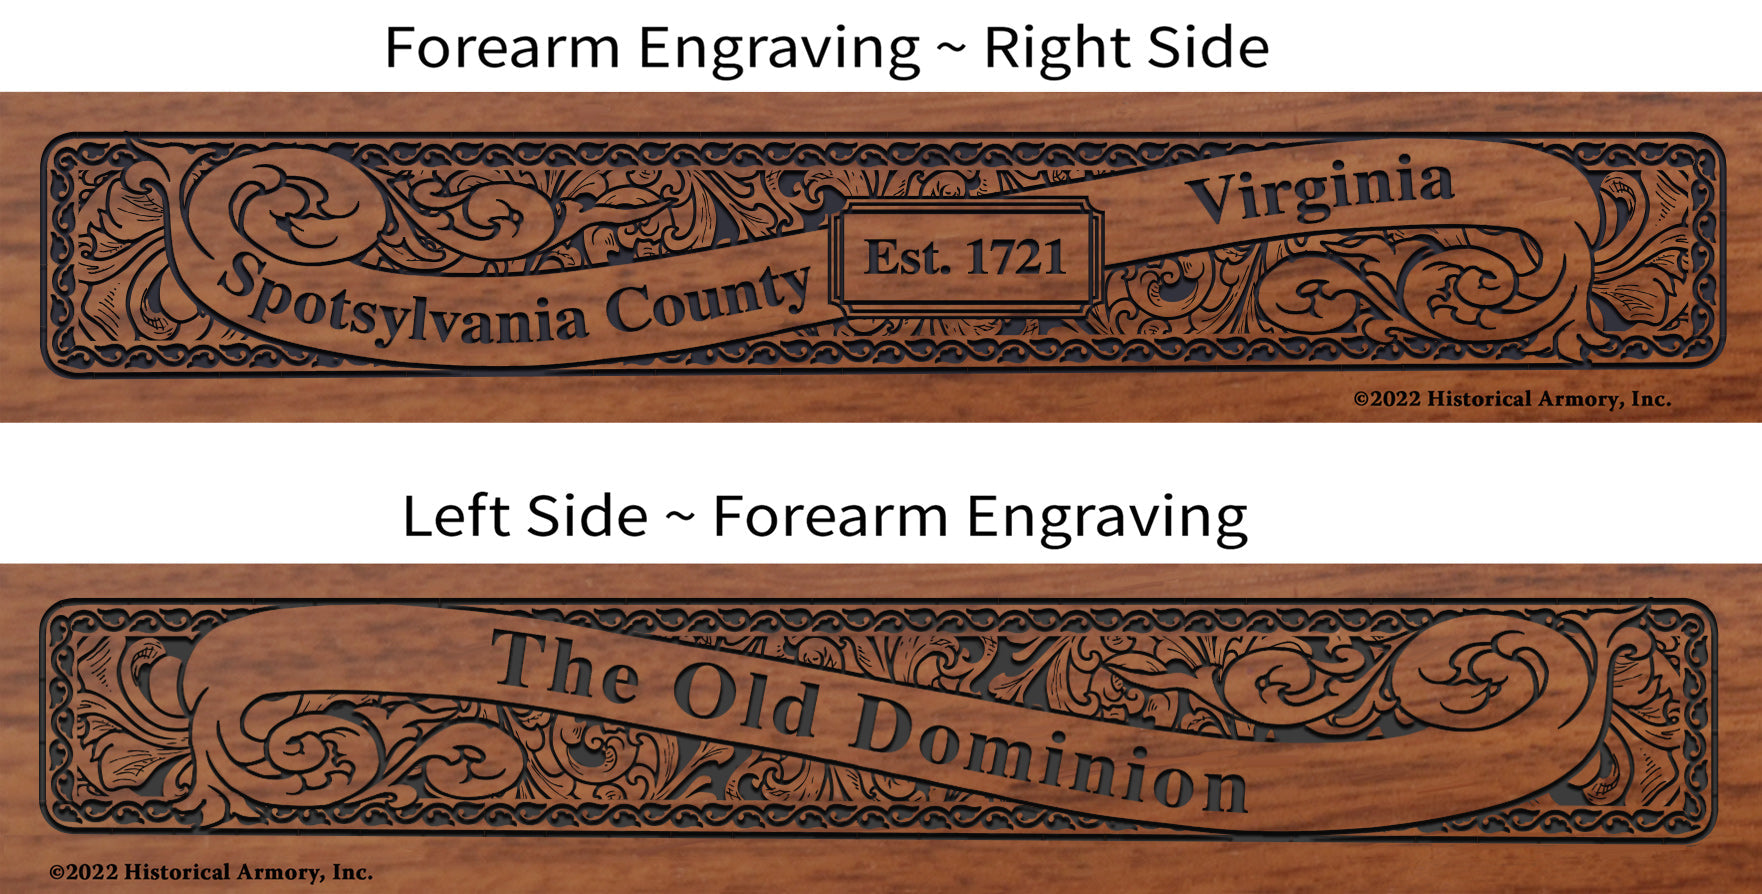 Spotsylvania County Virginia Engraved Rifle Forearm